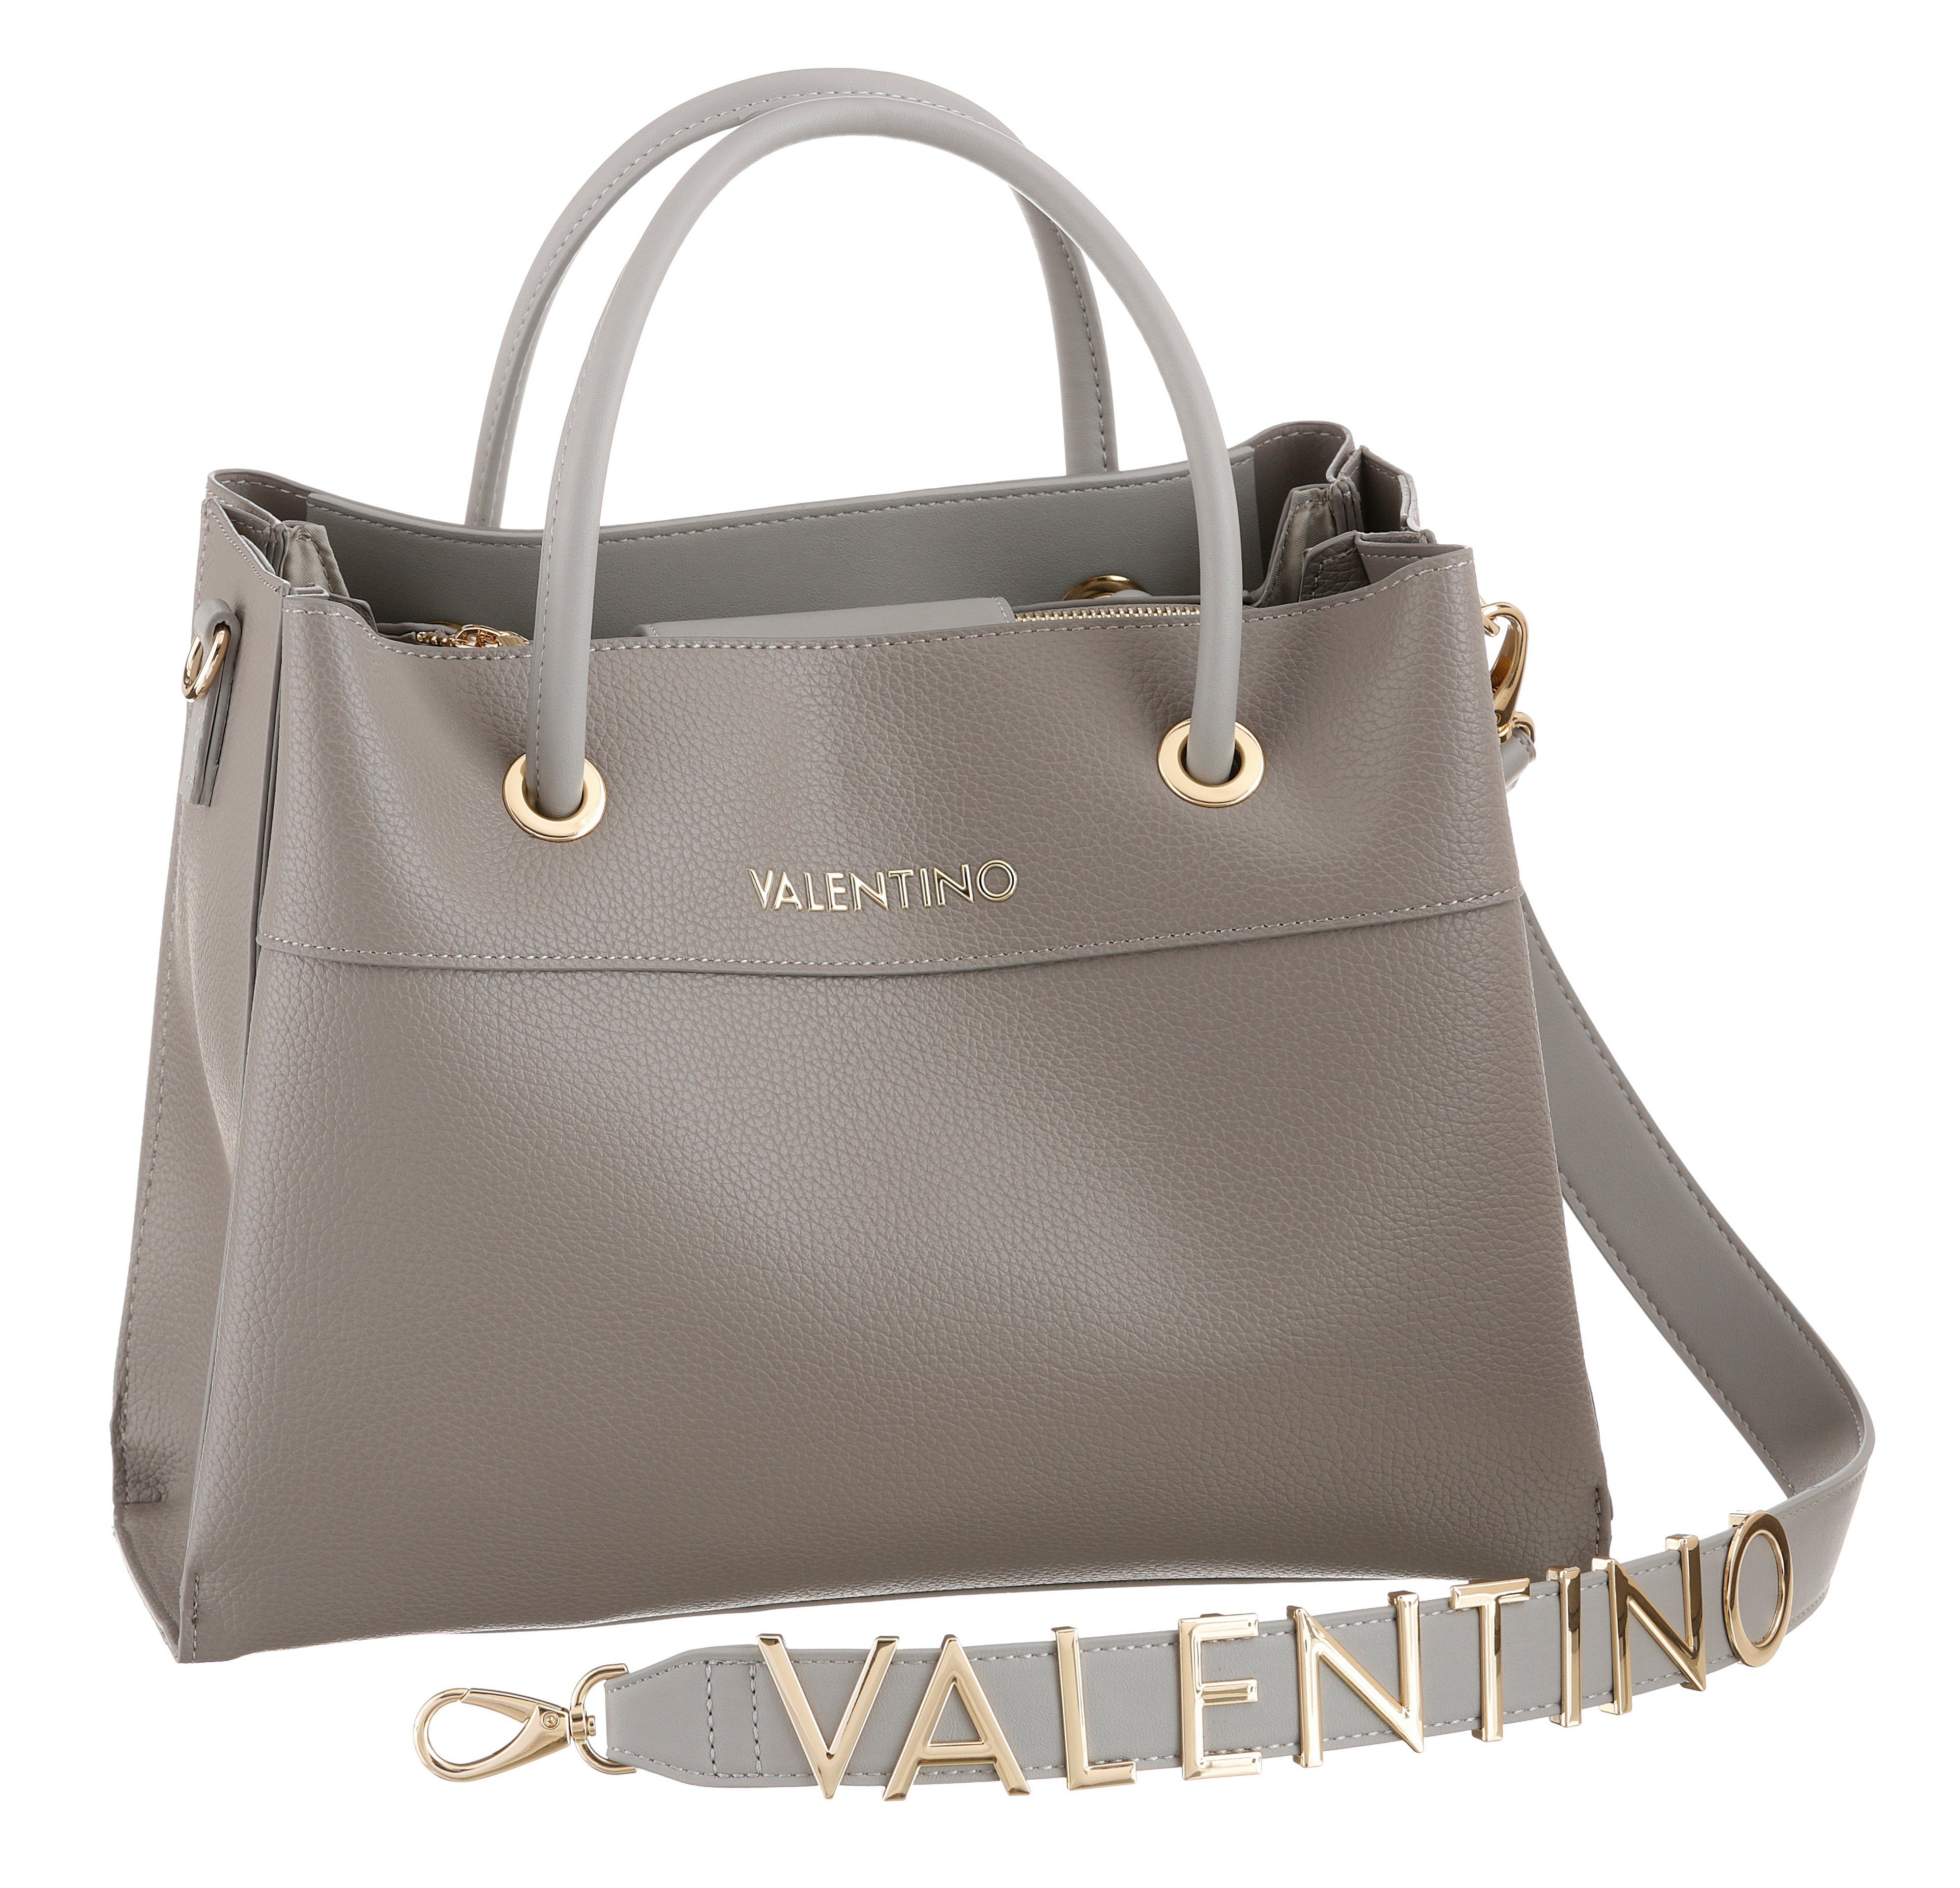 VALENTINO BAGS Handtasche Alexia Tote 802, Shopper